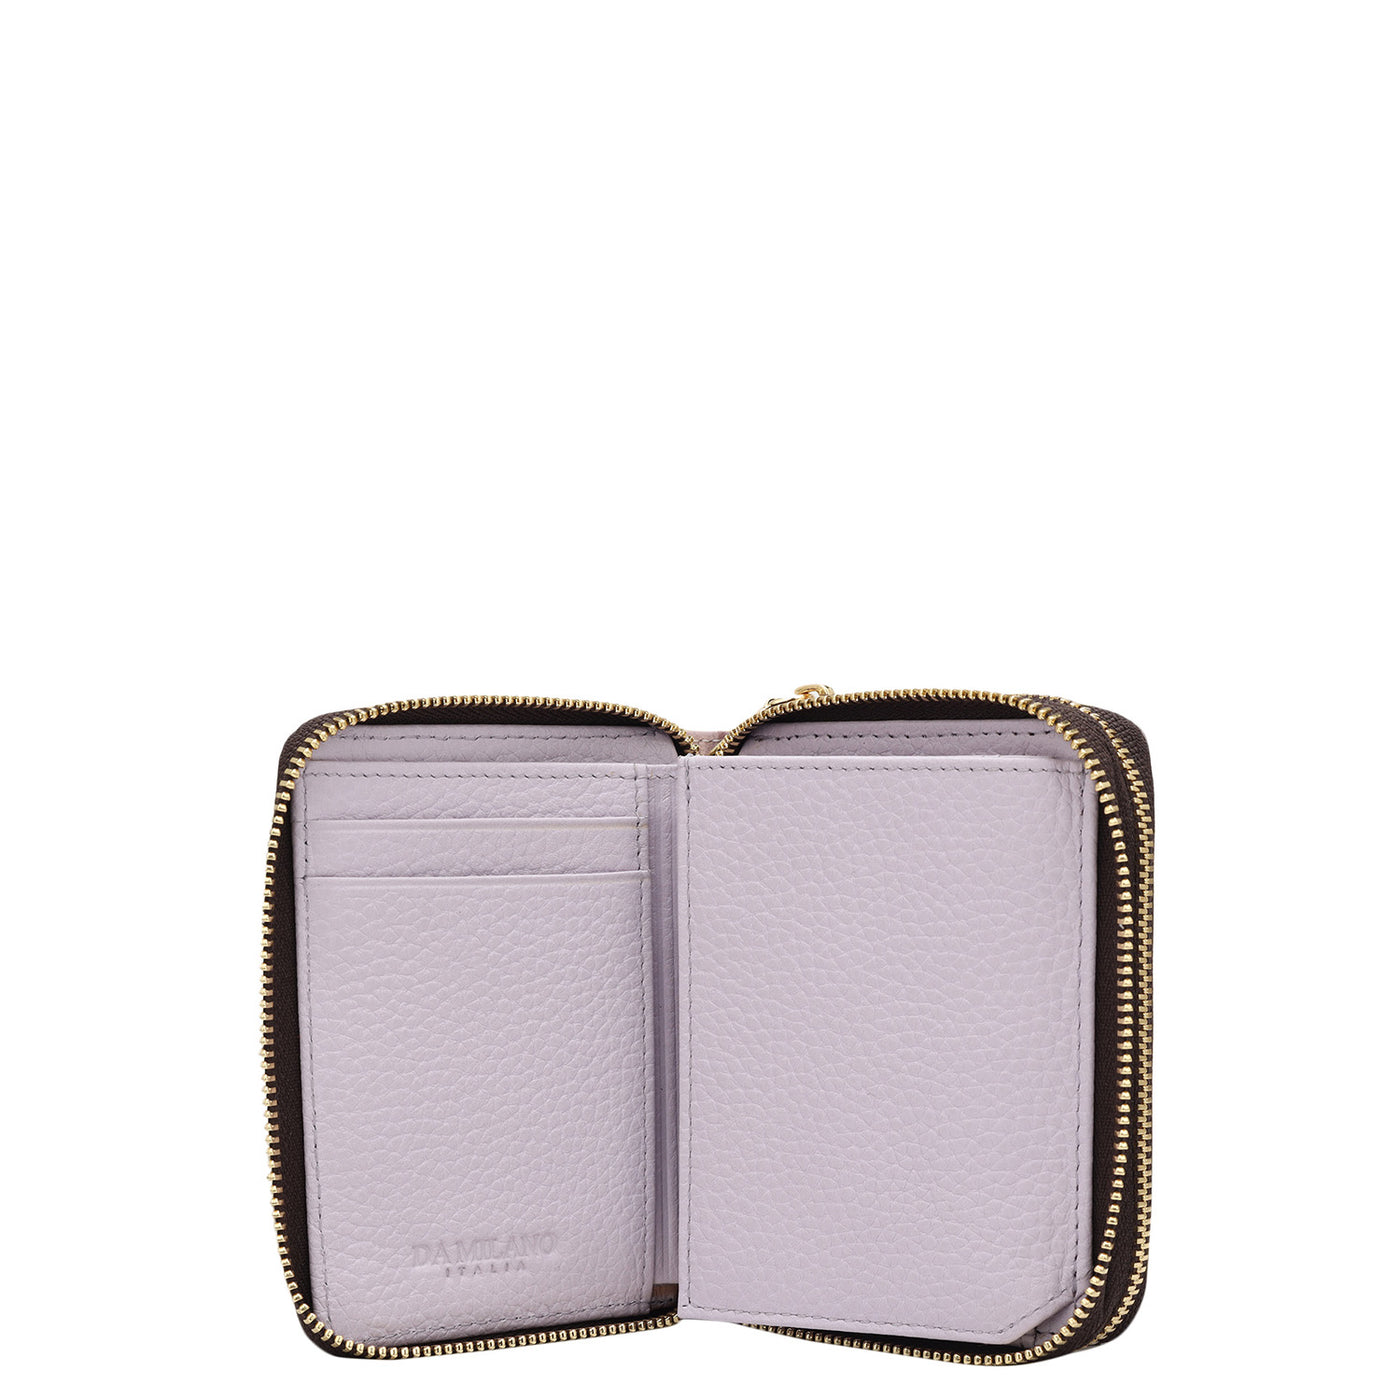 Ostrich Leather Ladies Wallet - Lavender